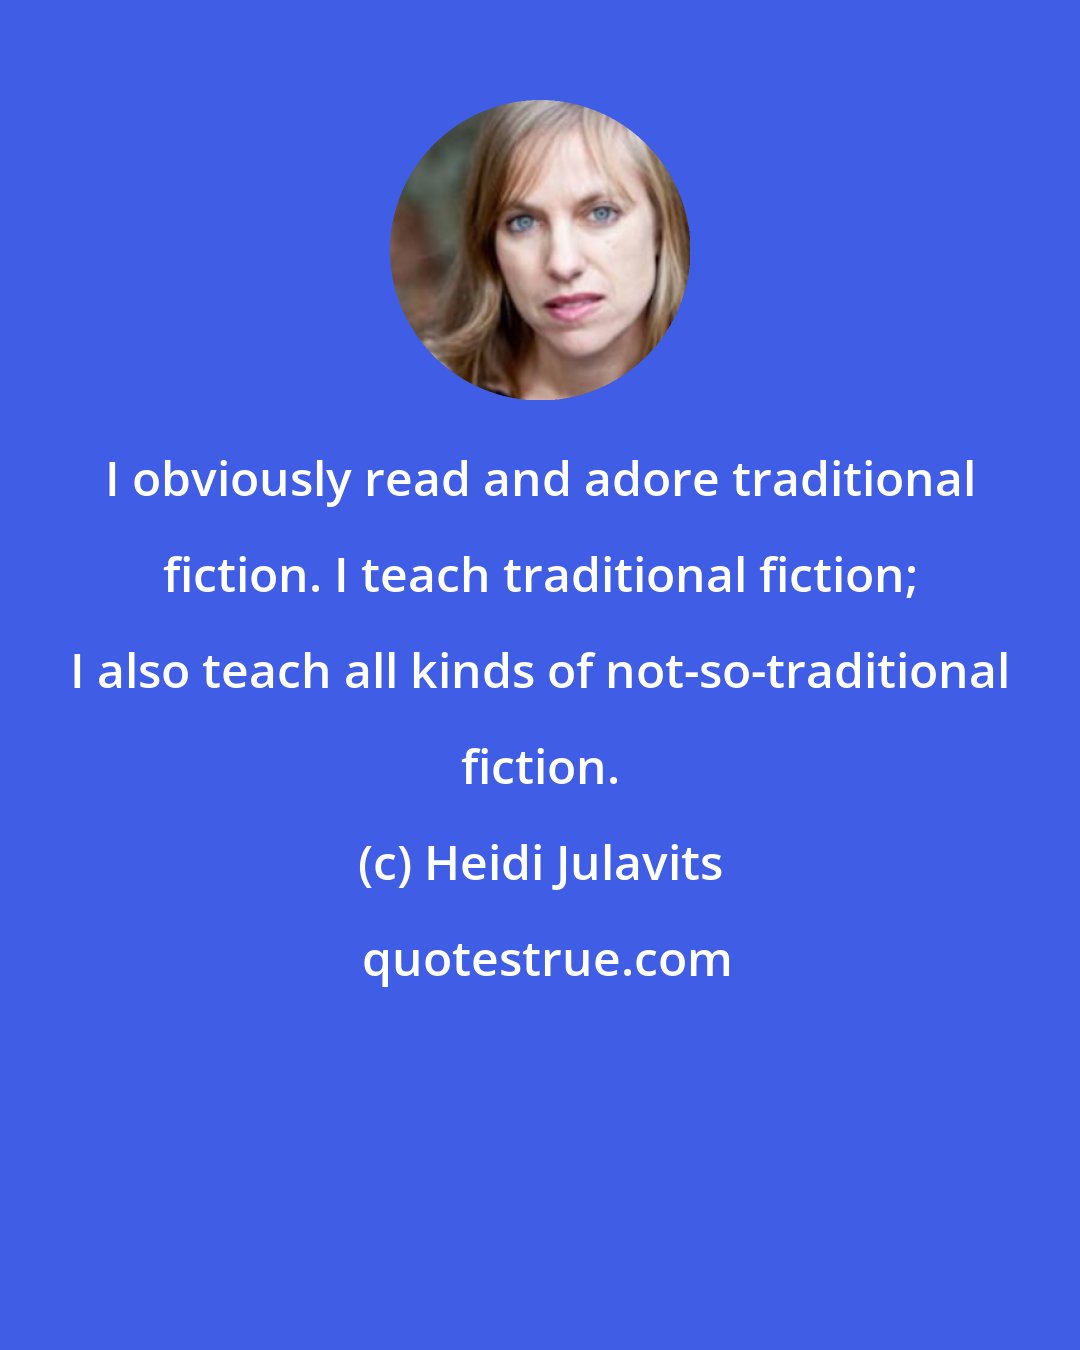 Heidi Julavits: I obviously read and adore traditional fiction. I teach traditional fiction; I also teach all kinds of not-so-traditional fiction.